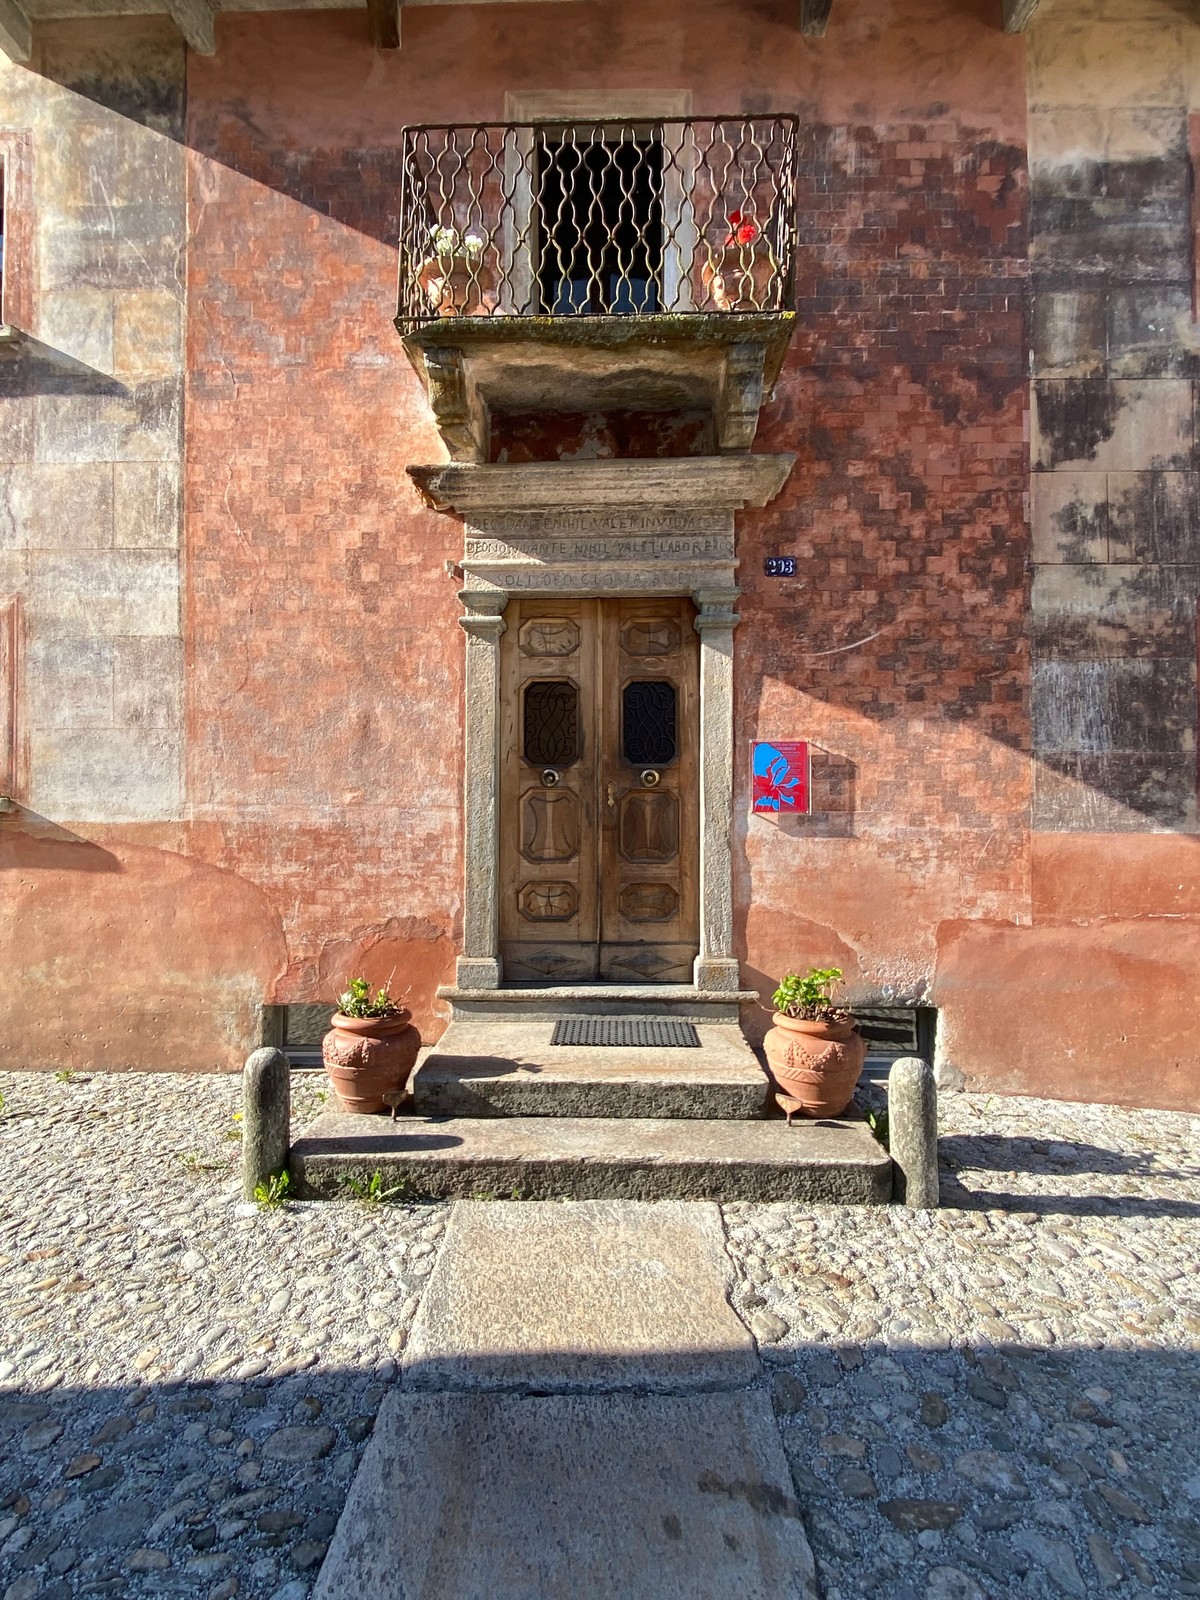 Eingang des Palazzo Castelmur mit Inschrift